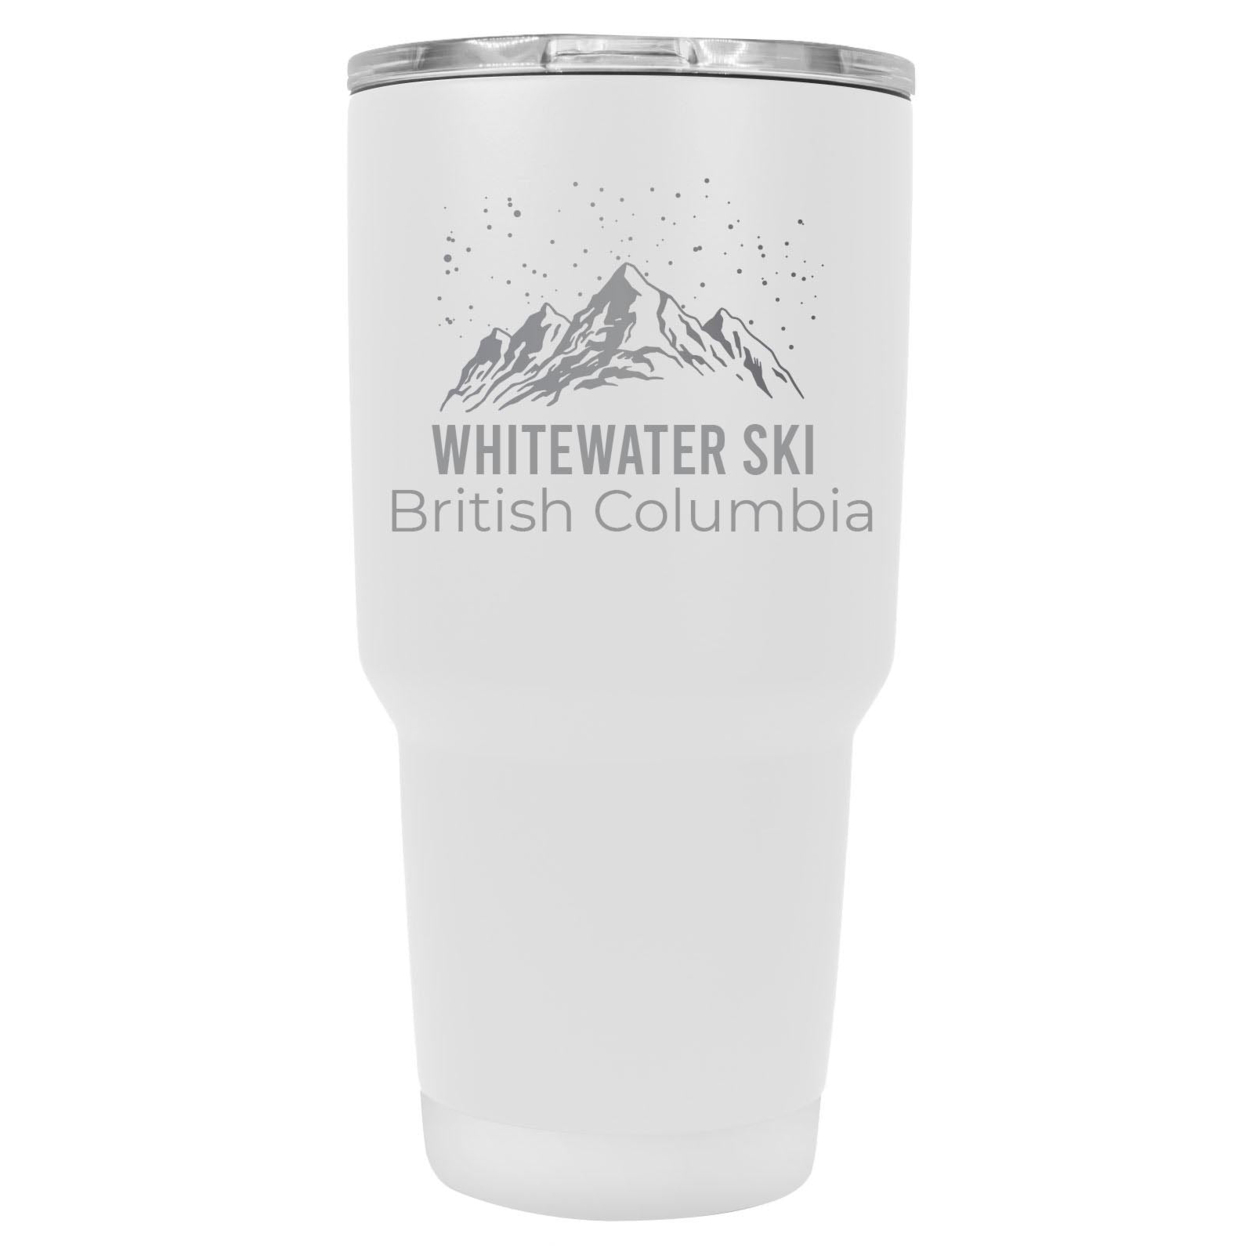 Whitewater Ski British Columbia Ski Snowboard Winter Souvenir Laser Engraved 24 Oz Insulated Stainless Steel Tumbler - White